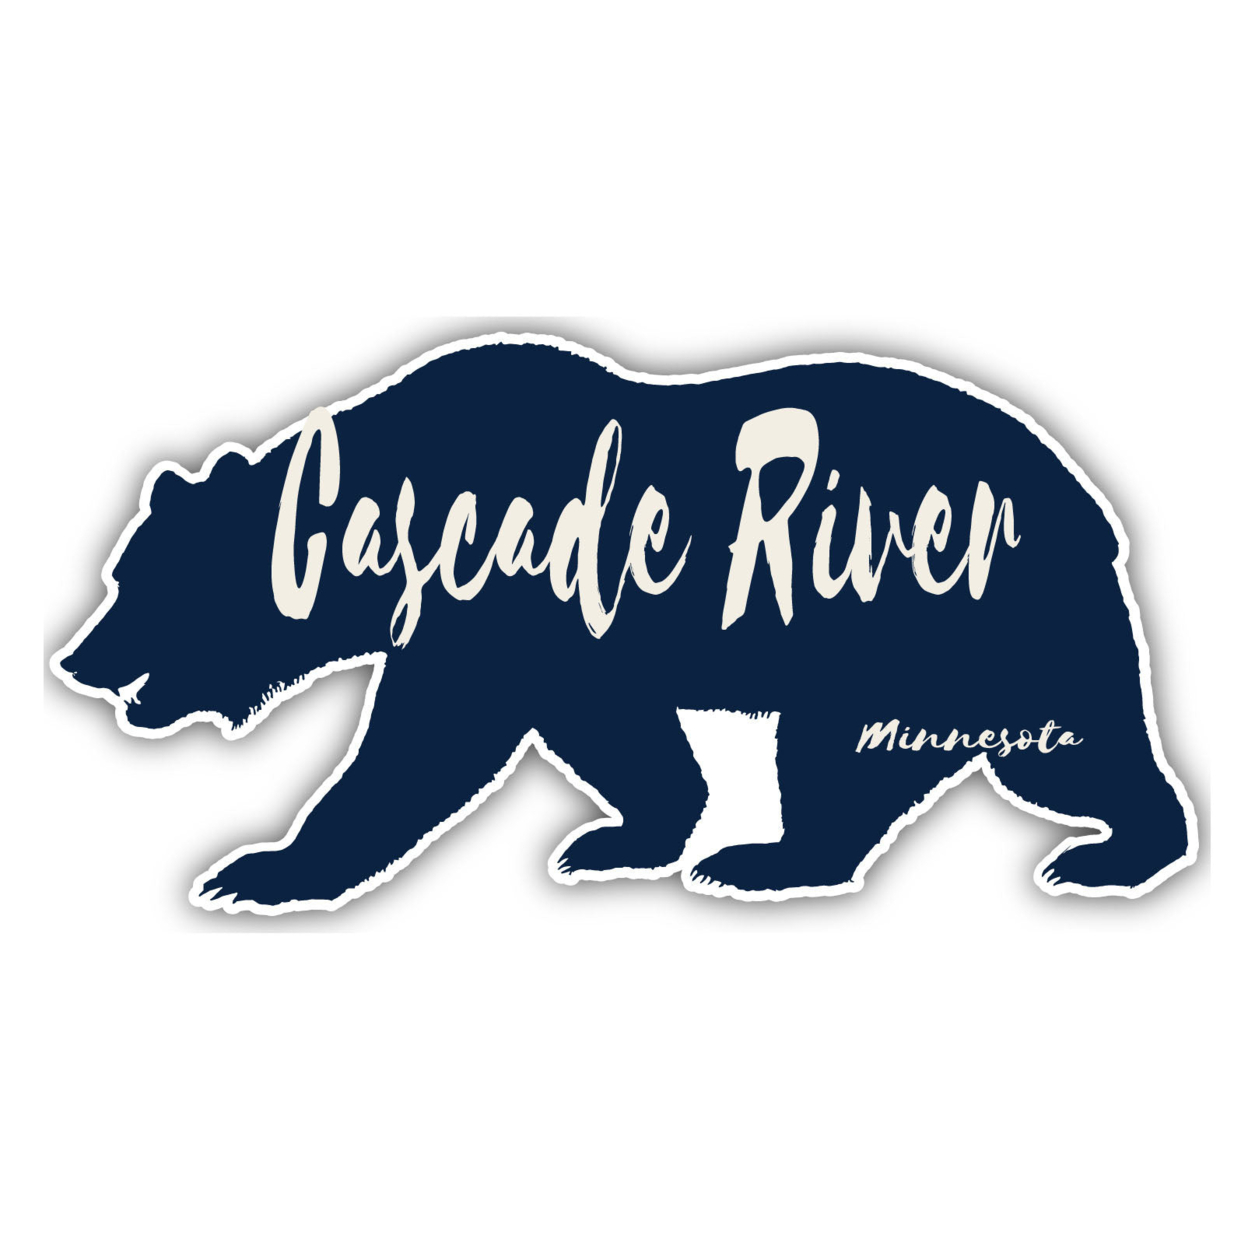 Cascade River Minnesota Souvenir Decorative Stickers (Choose Theme And Size) - 4-Pack, 6-Inch, Bear